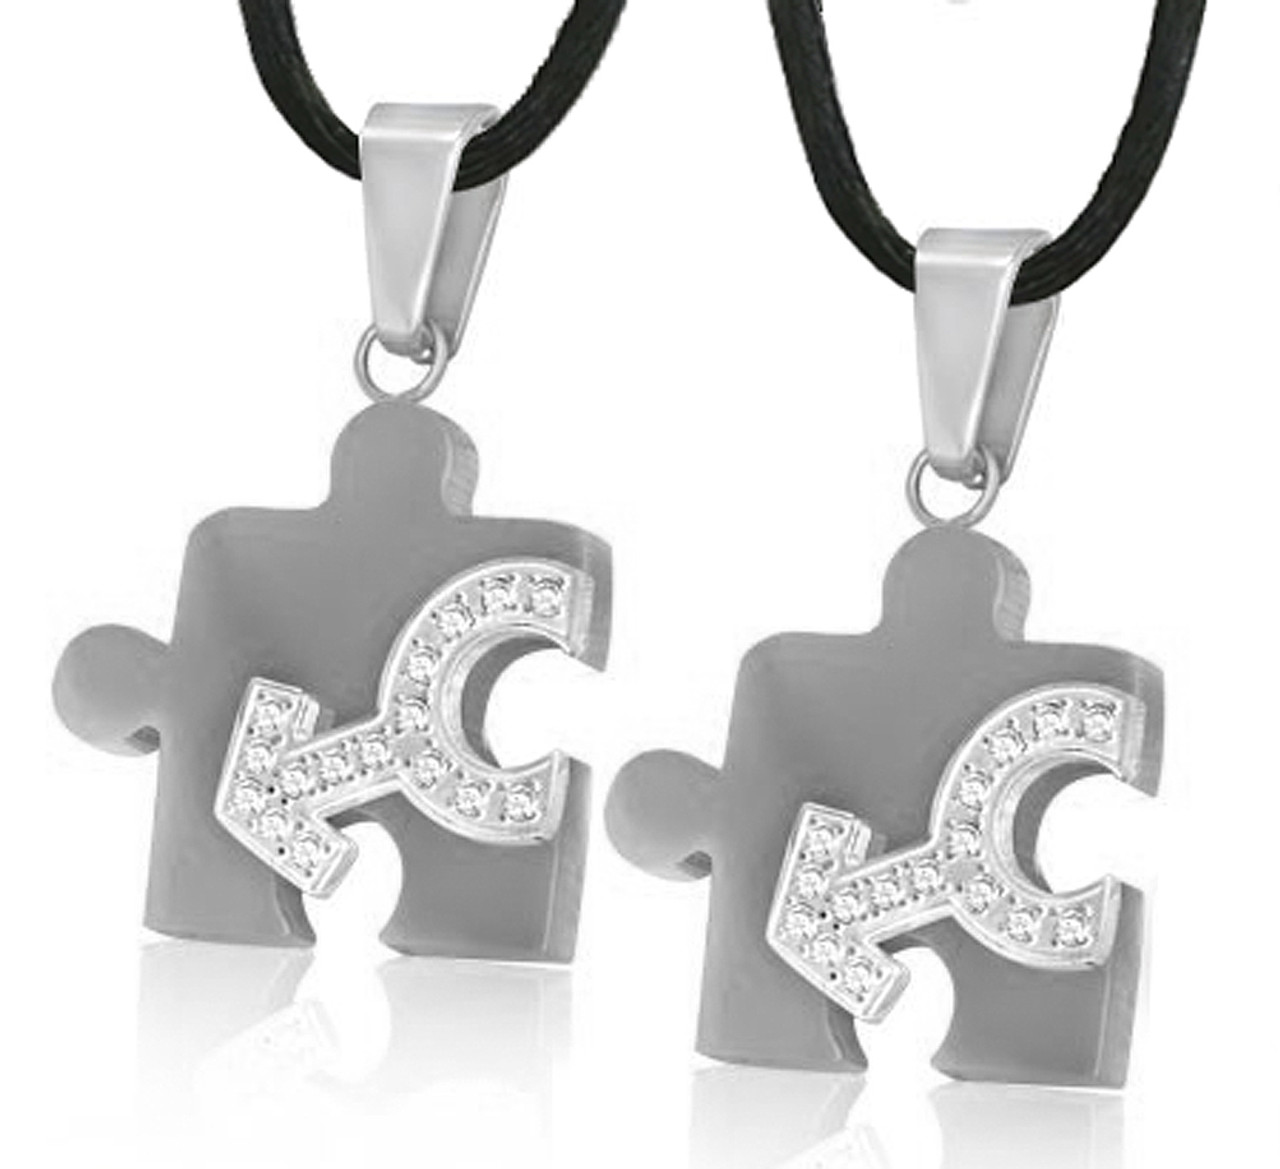 2pc Bling Set - Male CZ Puzzle Steel & Mars Symbol Pendants - Men's Gay Pride Jewelry Set Necklaces